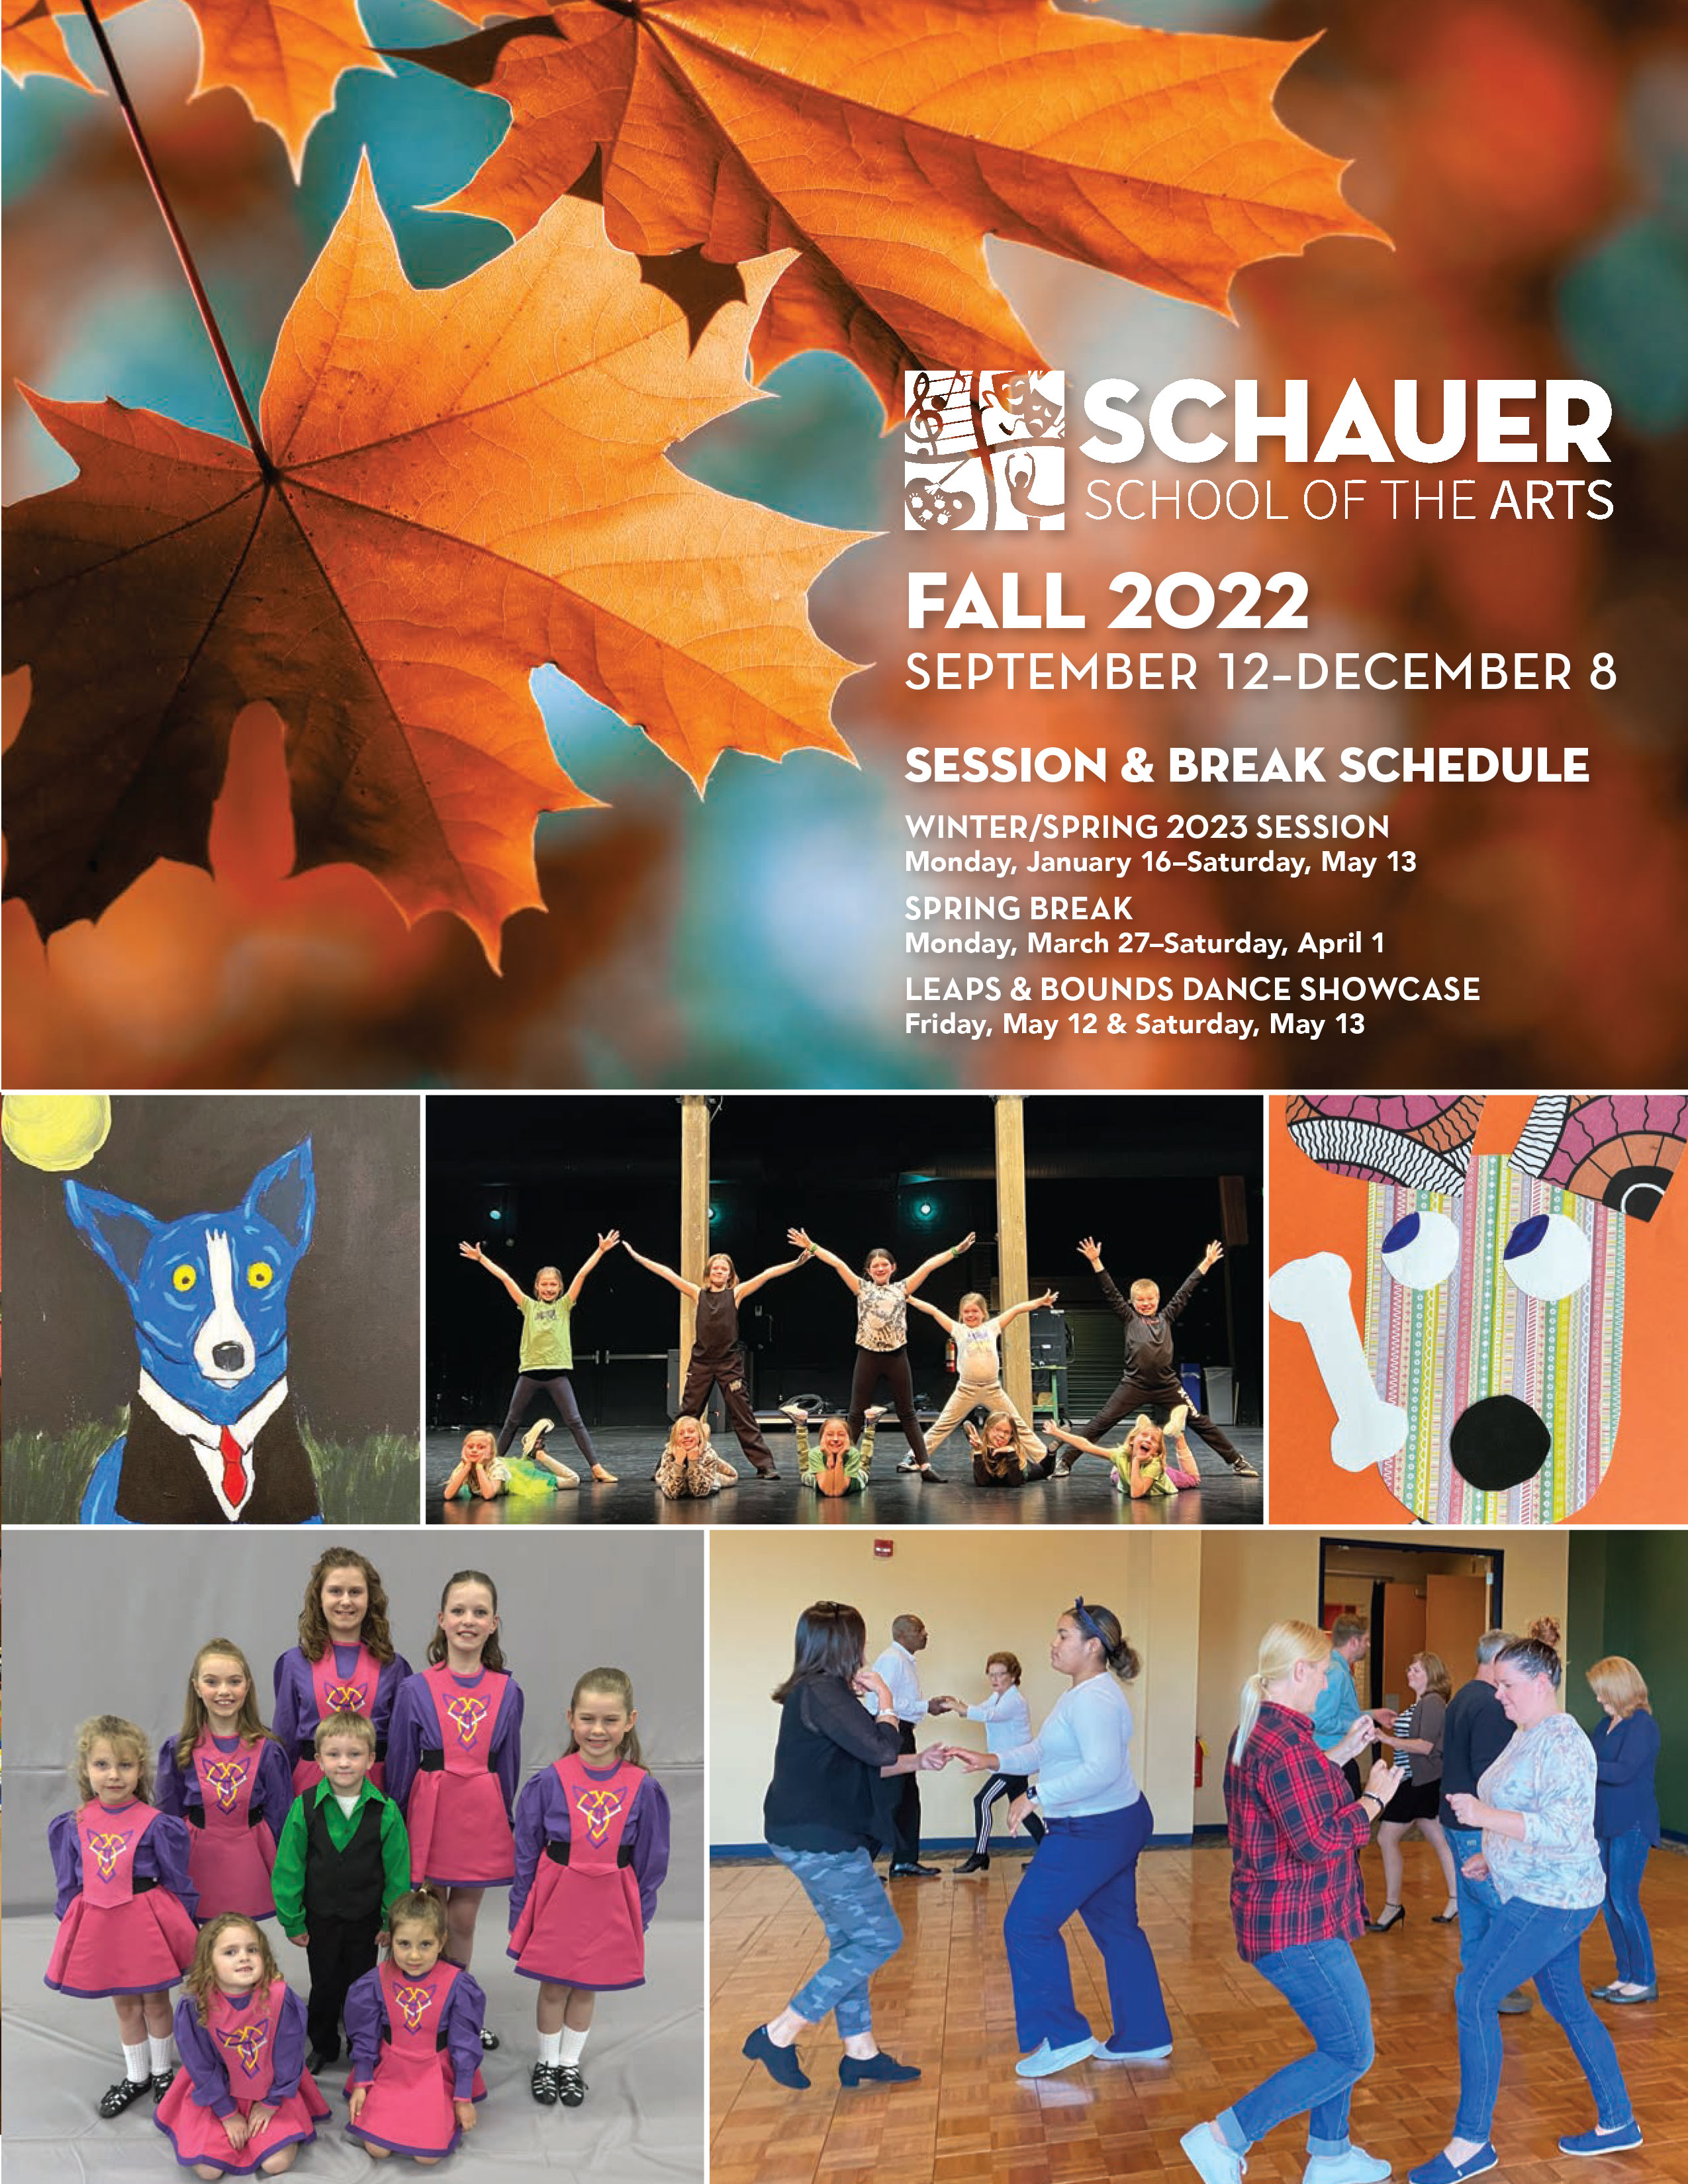 Schauer School of the Arts Winter Spring 2022 brochure cover